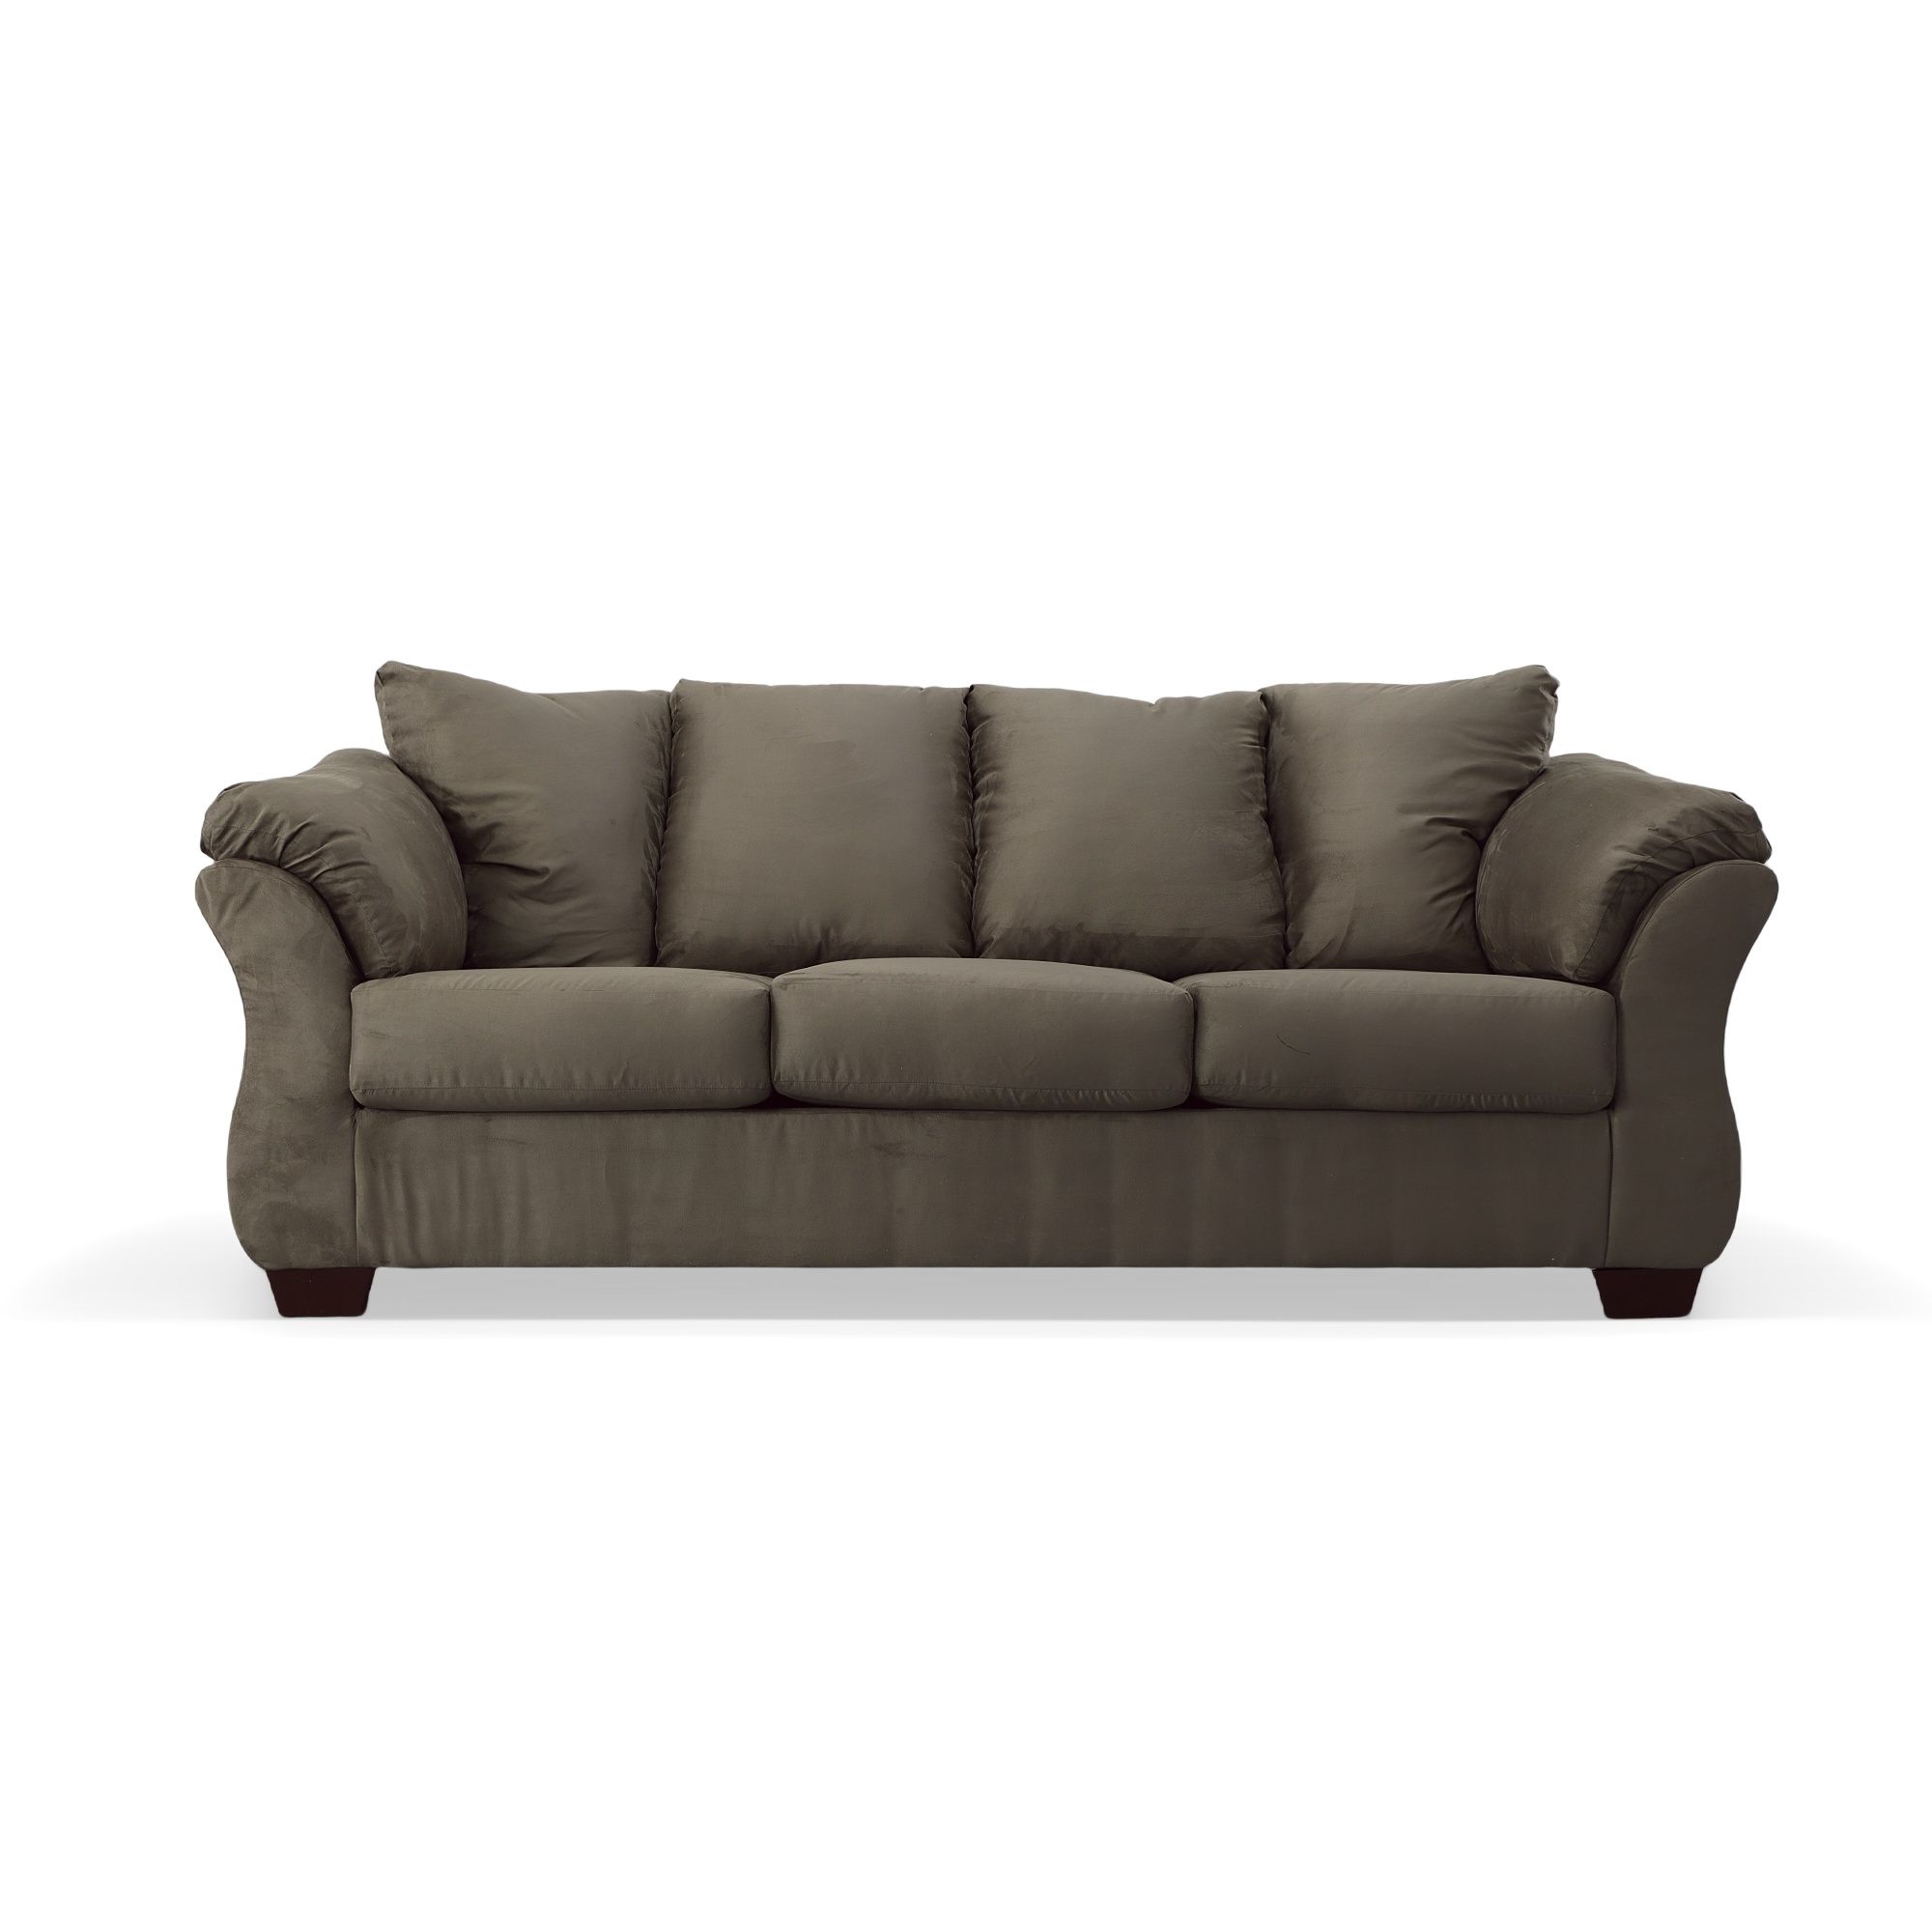 Darcy Sofa Bernie Phyl S Furniture